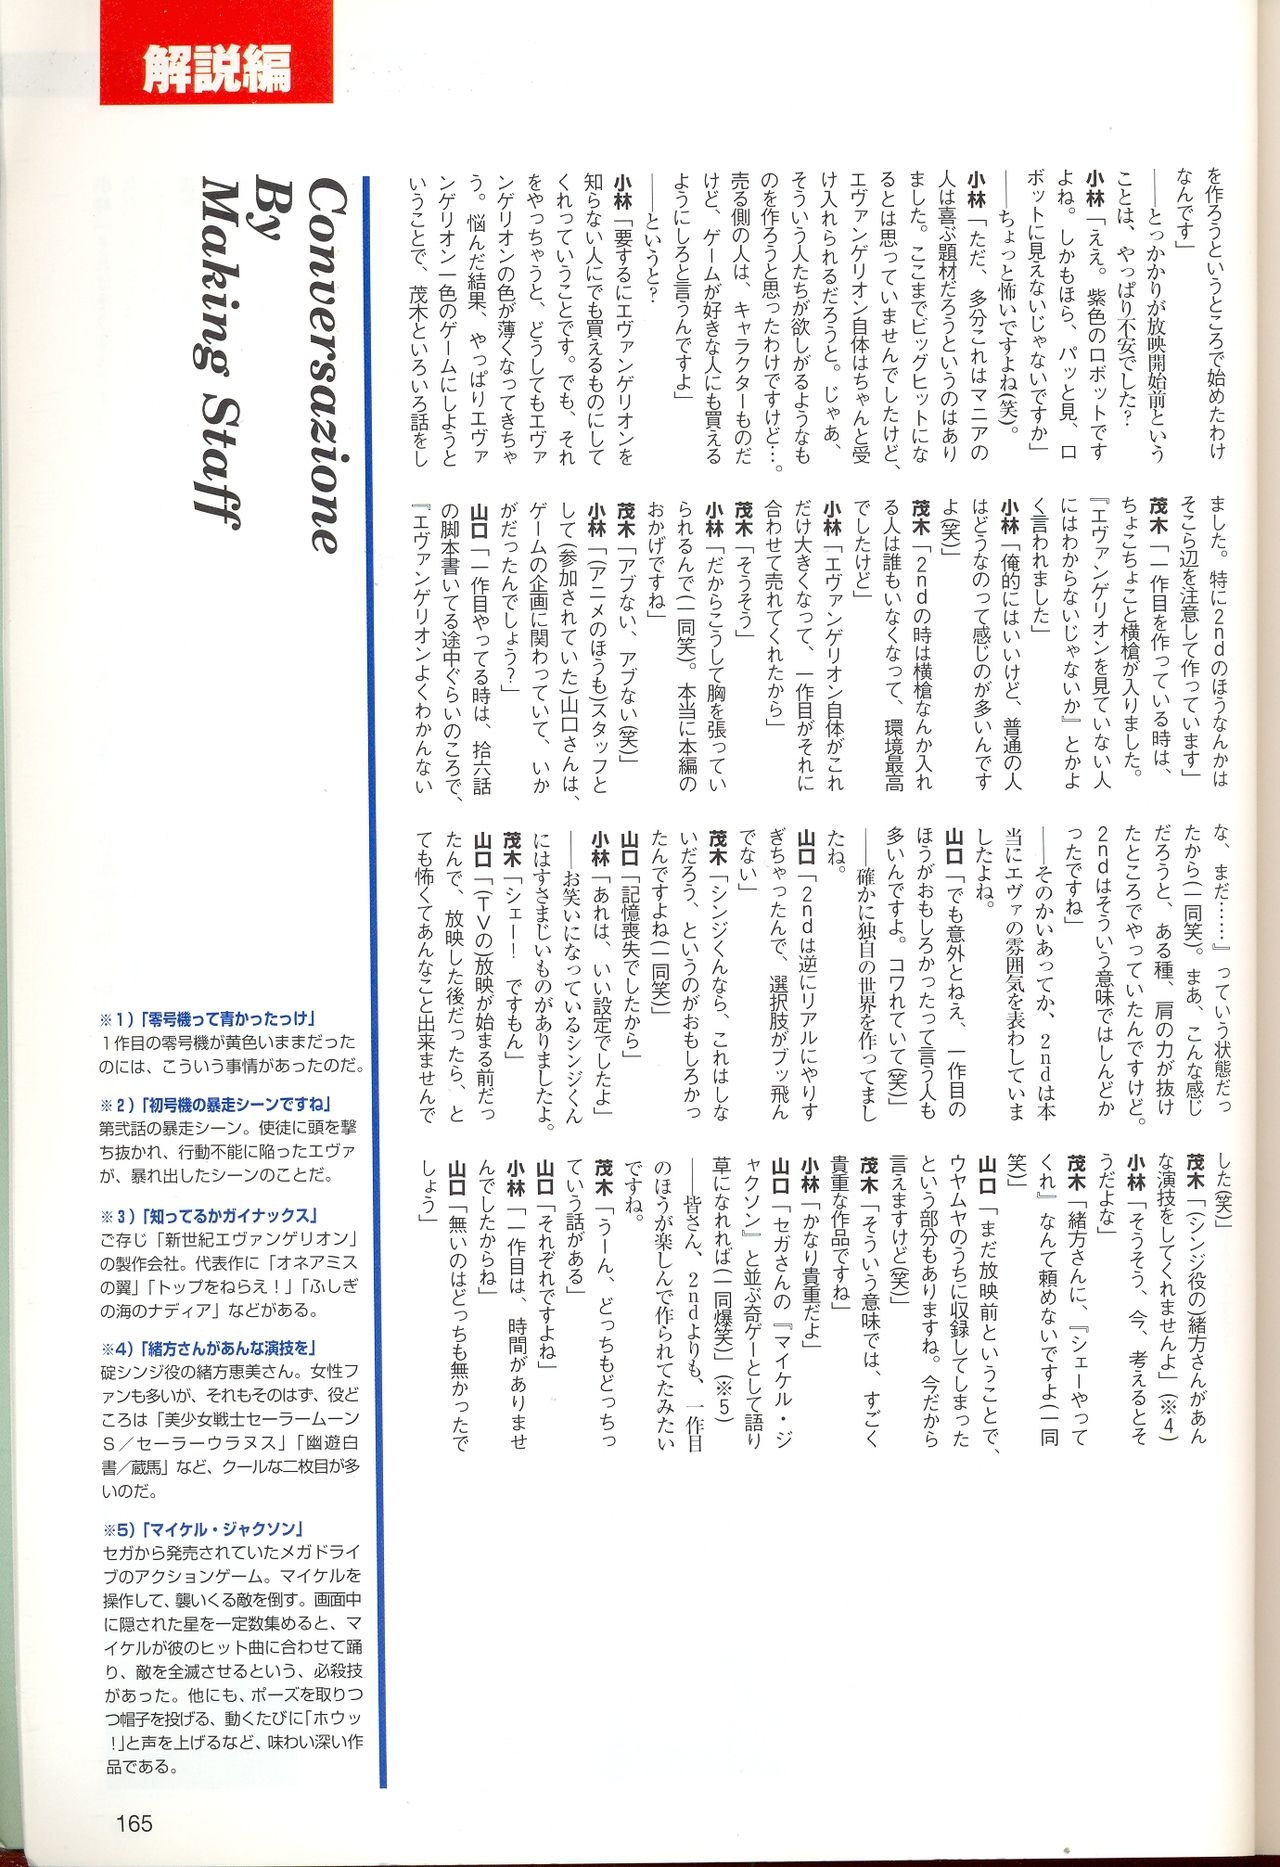 Neon Genesis Evangelion - 2nd Impression Sega Saturn Perfect Guide 164